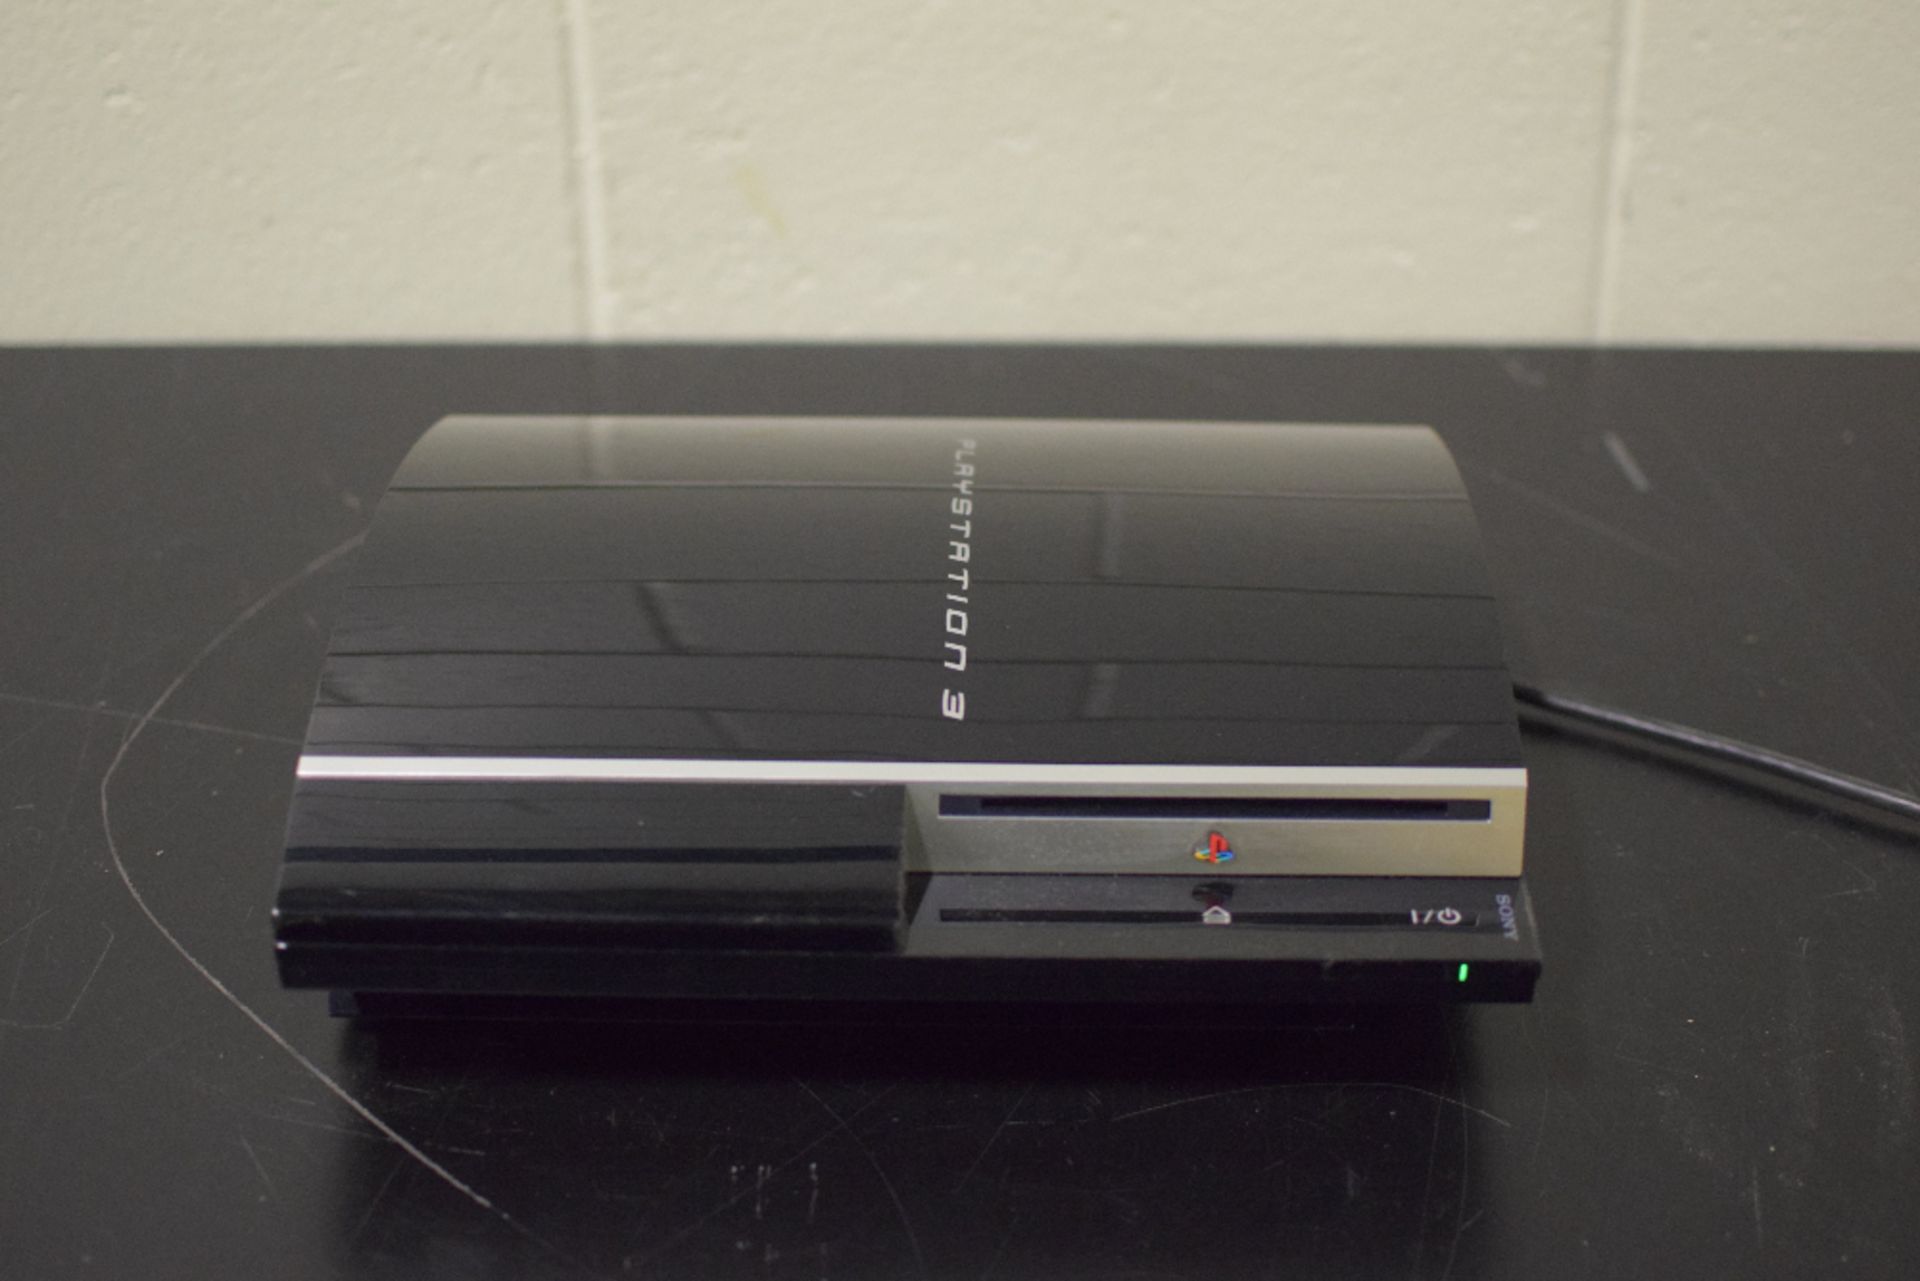 Sony Playstation 3 System